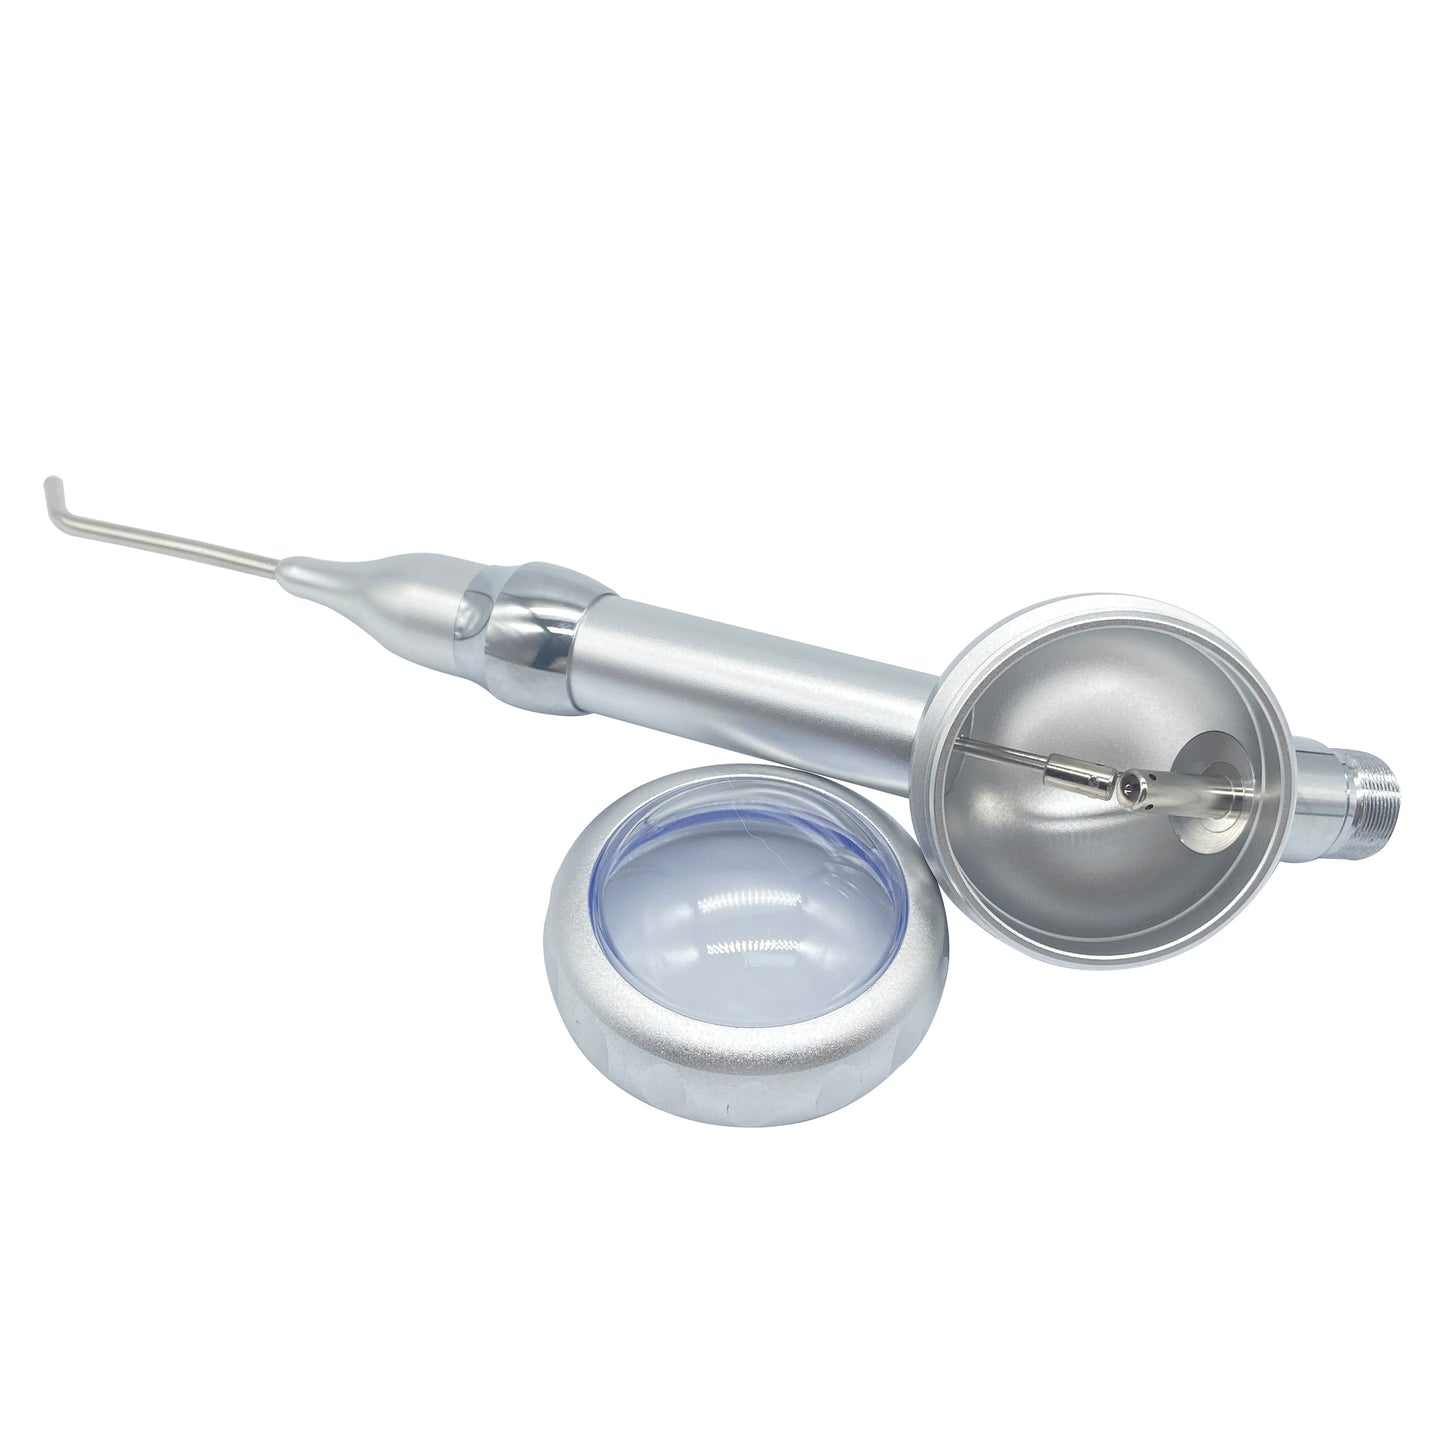 WELL CK Dental Tools Materials Air Prophy Unit Teeth Whitening Spray Polisher Dentistry Odontologia Use Sandblasting Machine